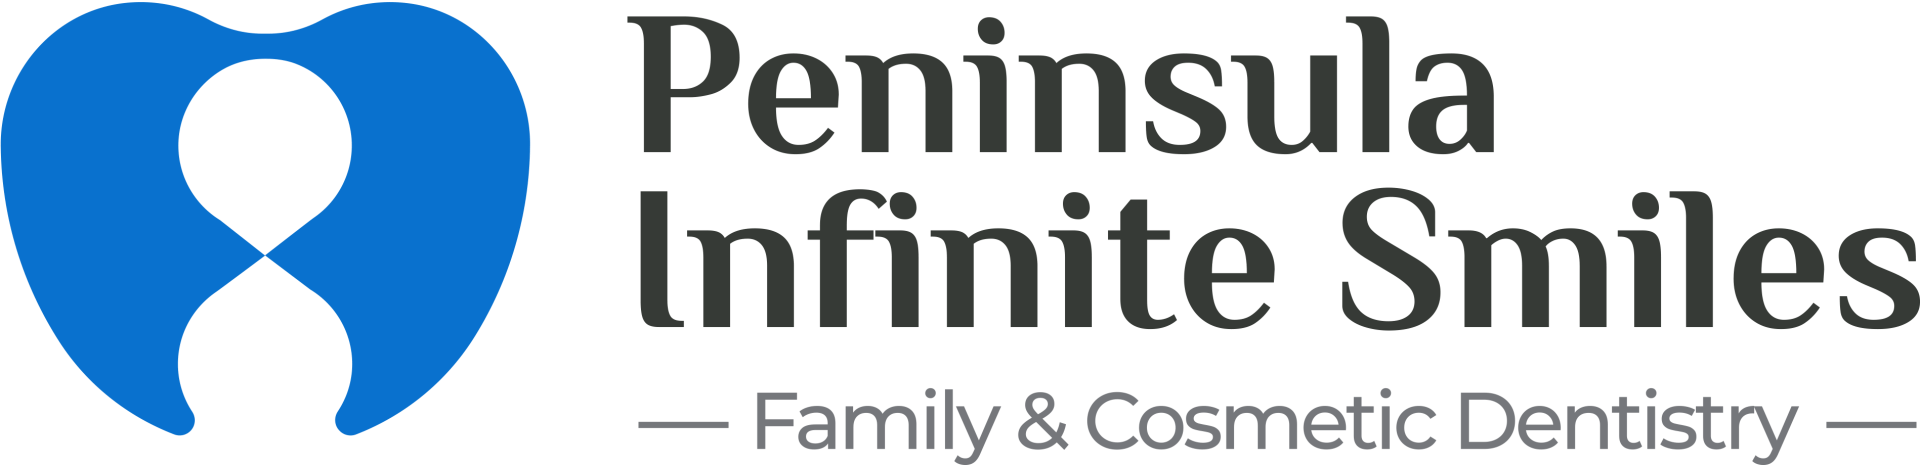 Peninsula Infinite Smiles logo